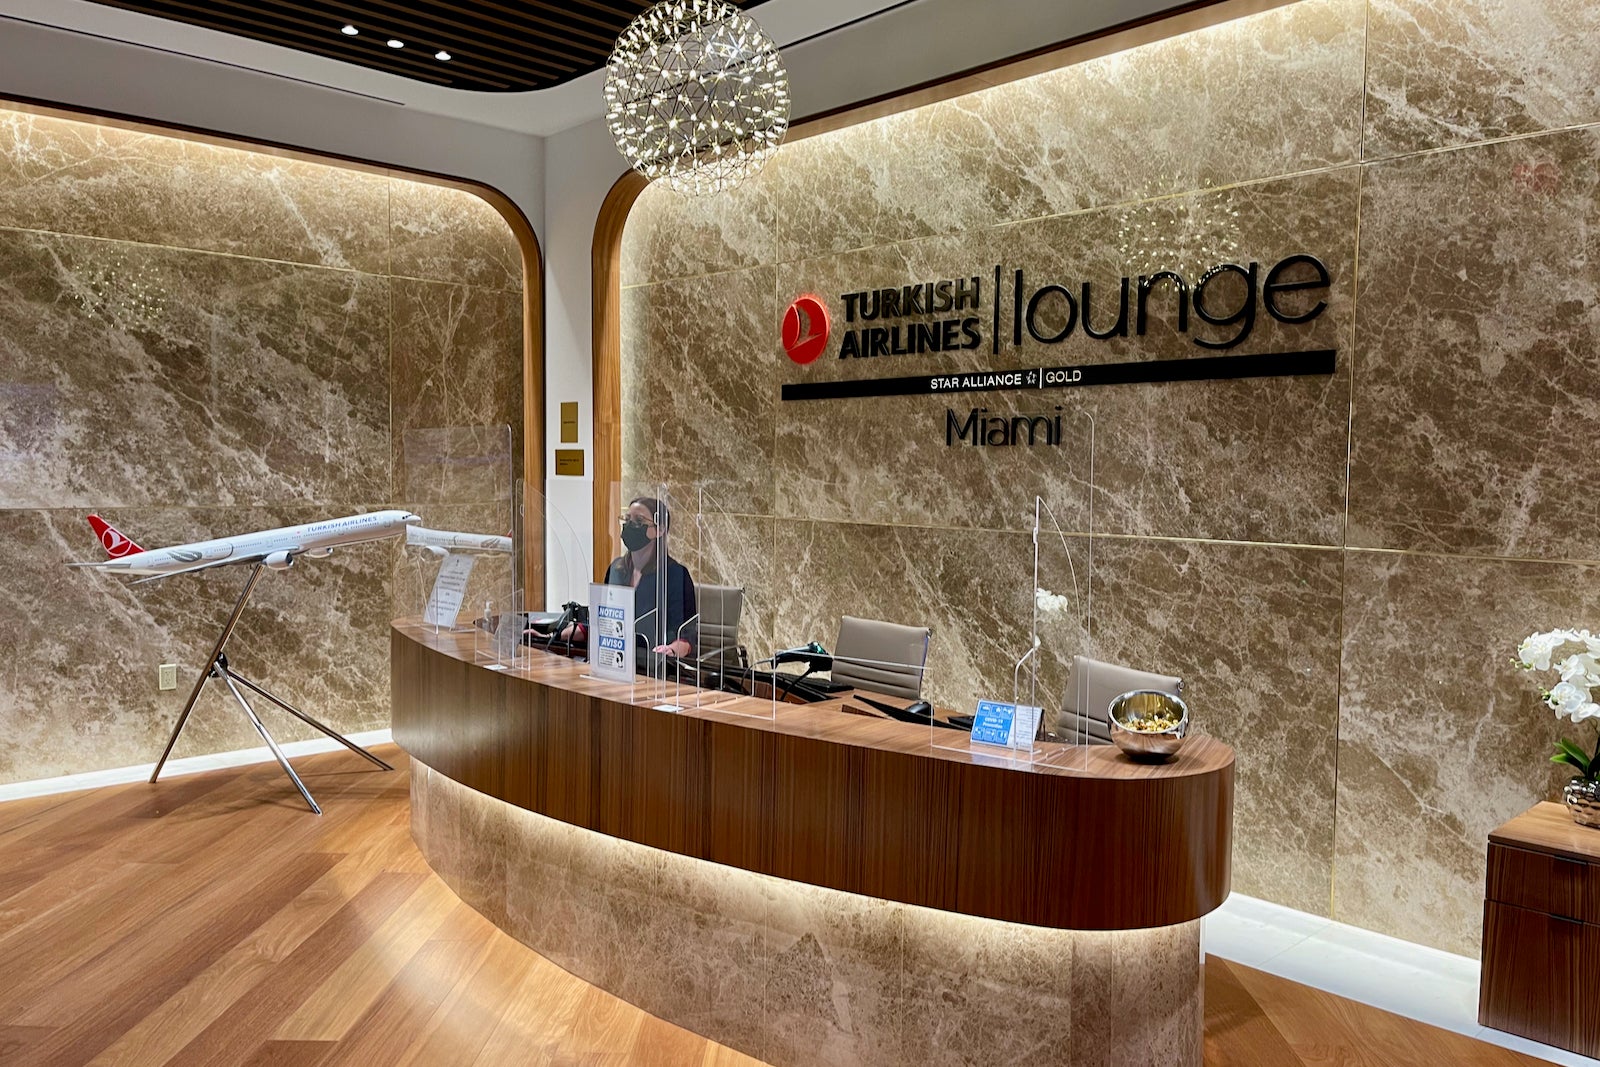 Turkish Airlines Lounge Miami MIA Zach Griff - 31